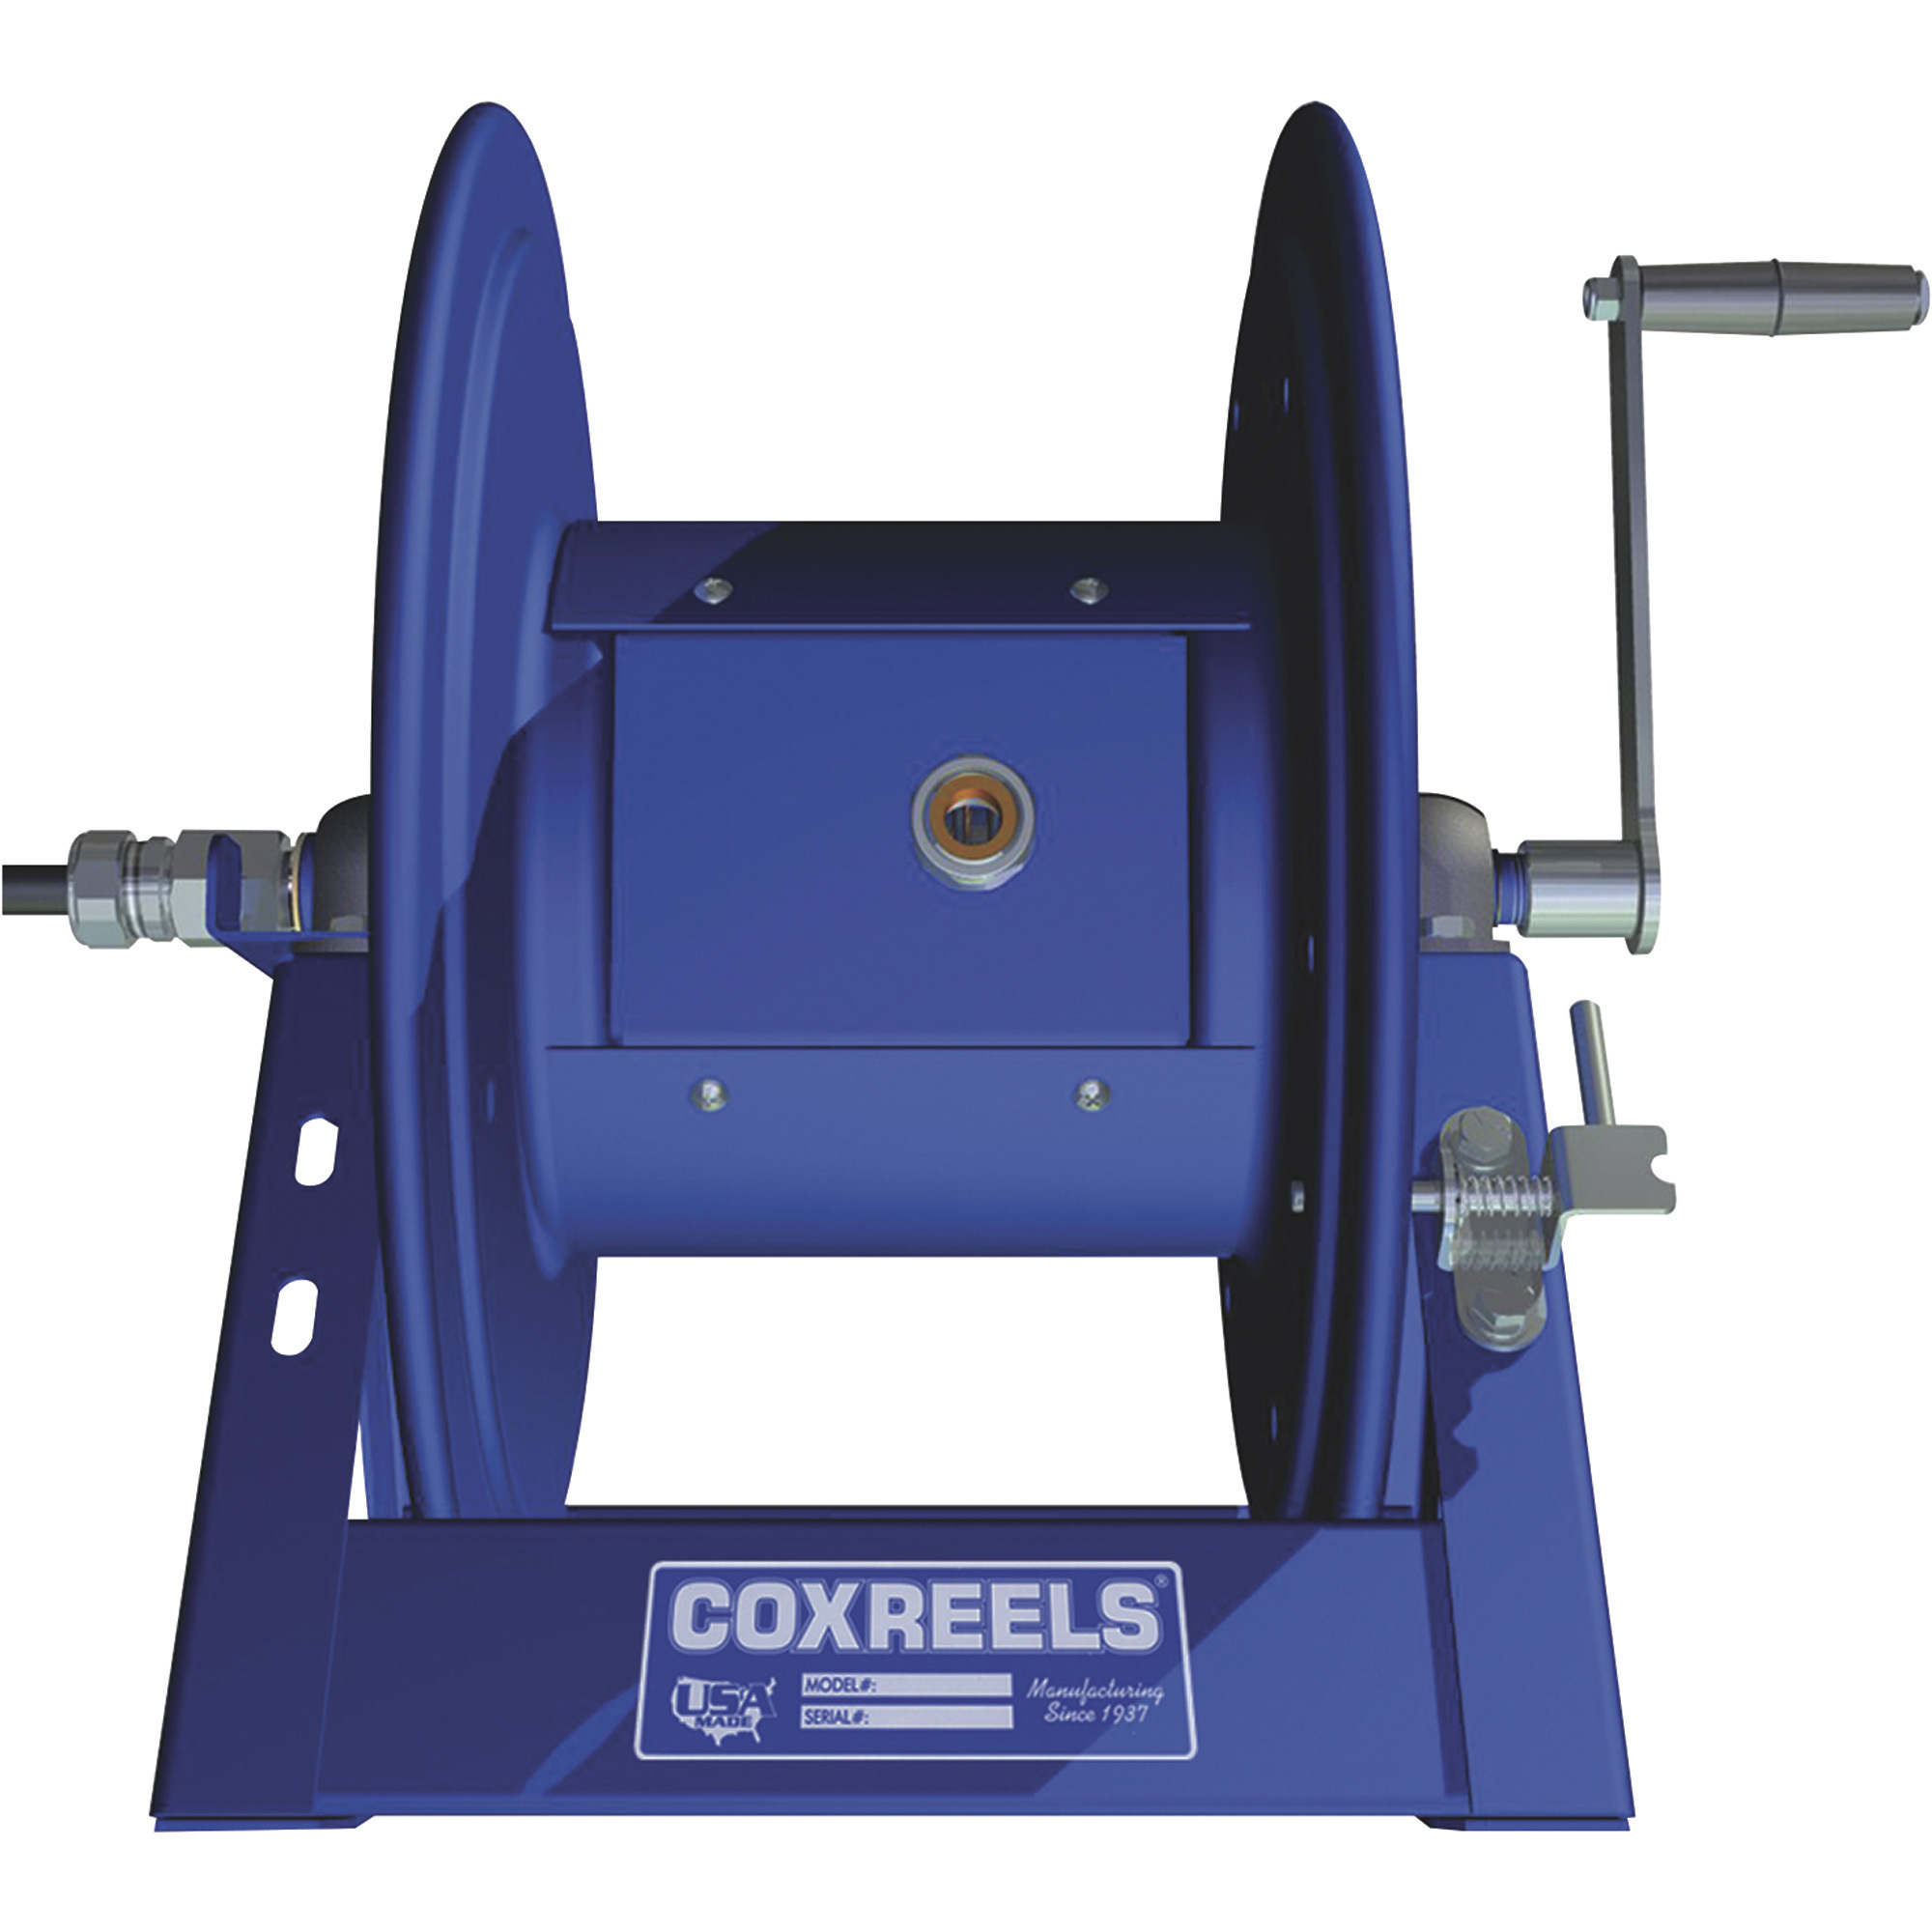 Coxreels Professional-Grade Electric Rewind Extension Cord Storage